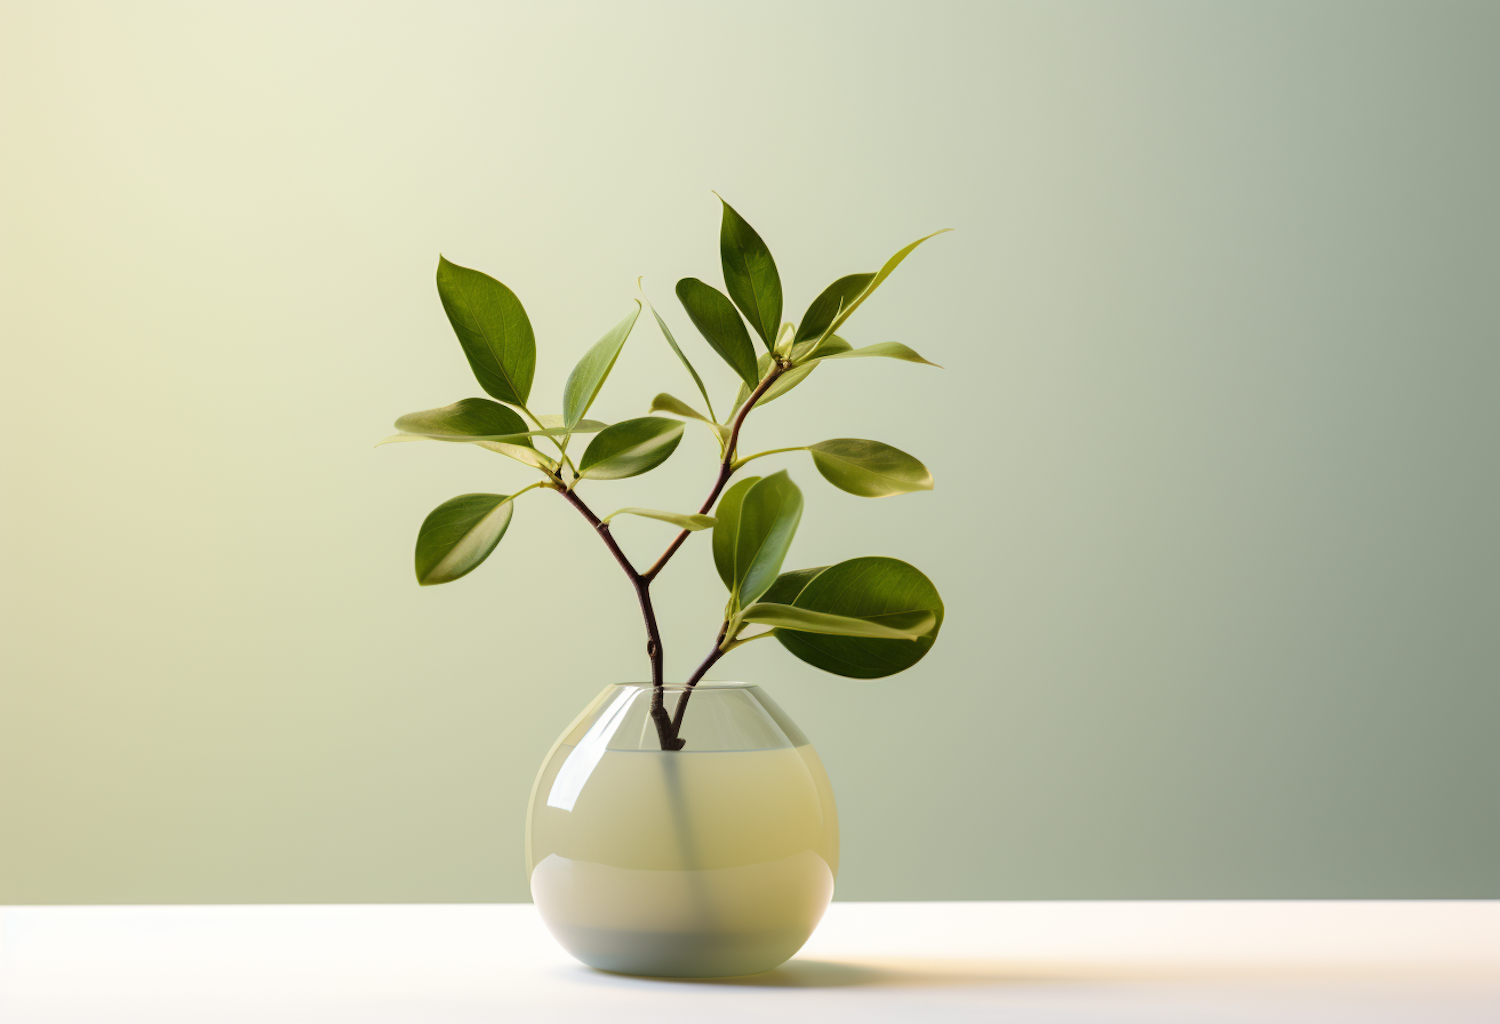 Modern Tranquility: Sleek Vase with Lush Green Plant